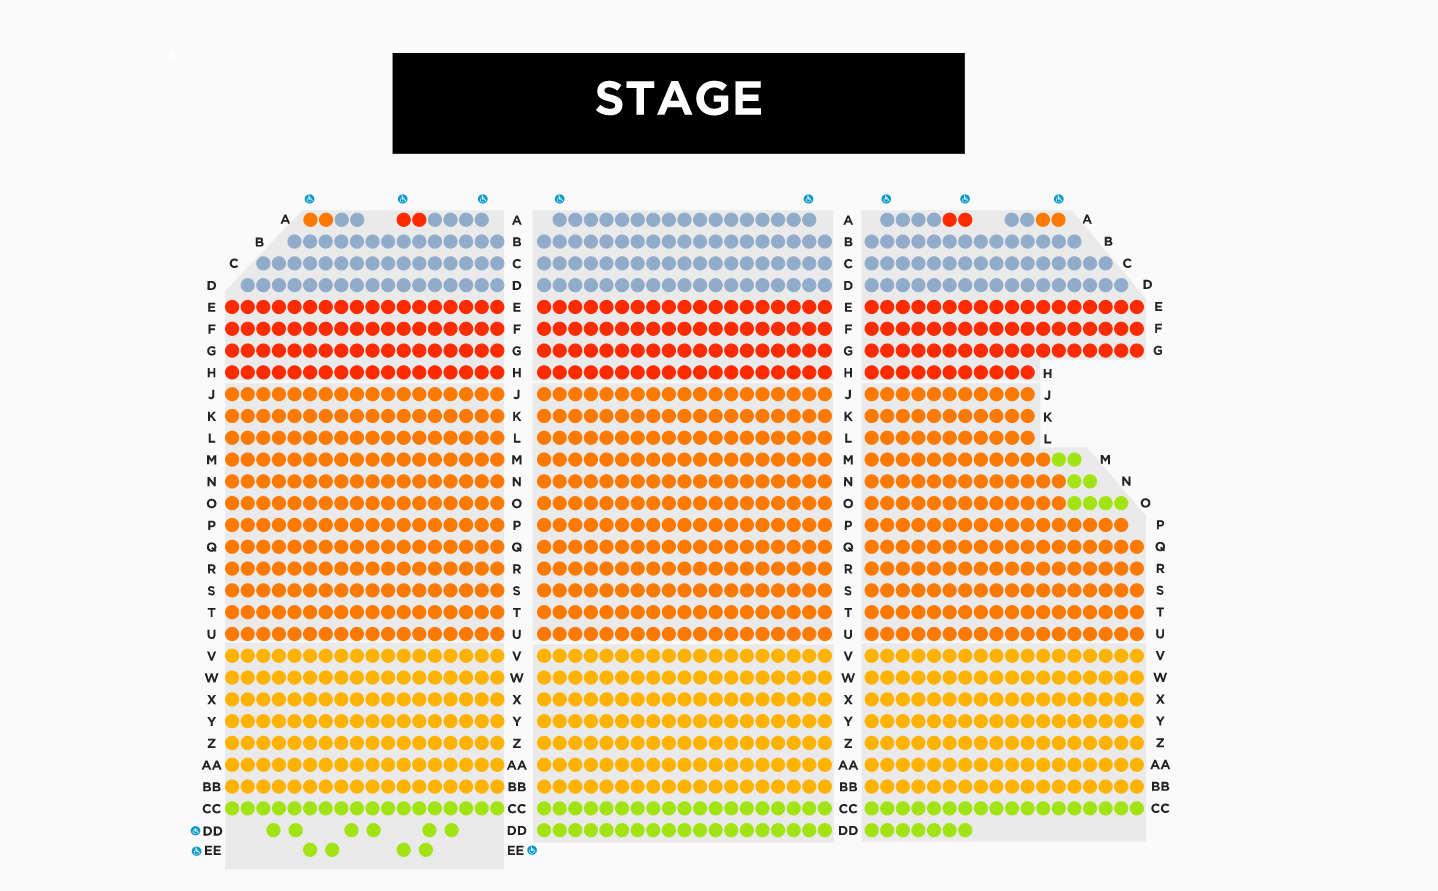 Parx Xcite Center Seating Chart